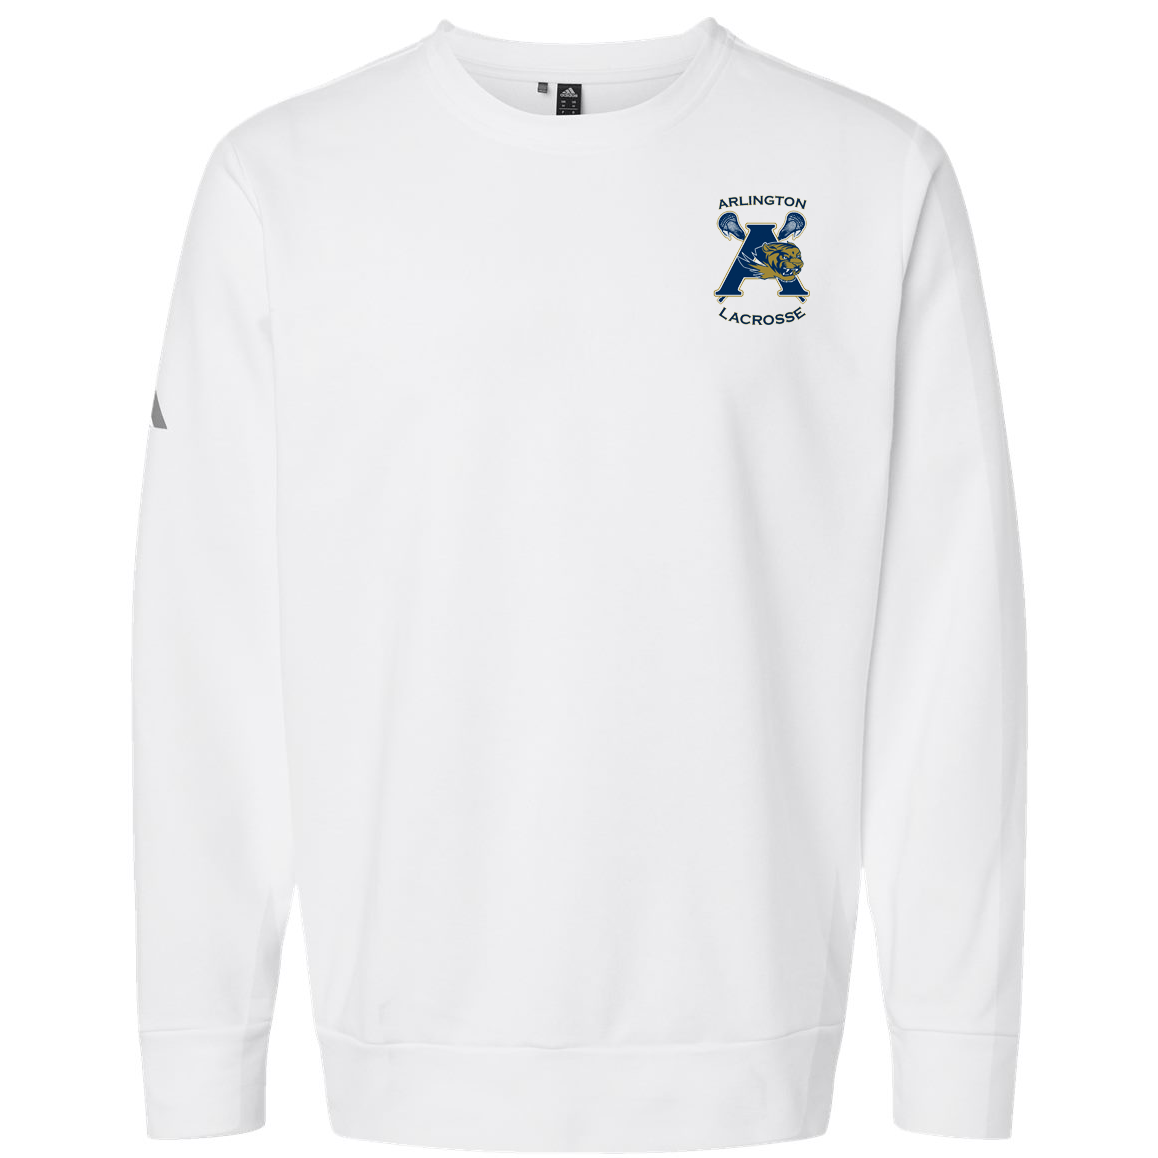 Arlington Lacrosse Adidas Fleece Crewneck Sweatshirt